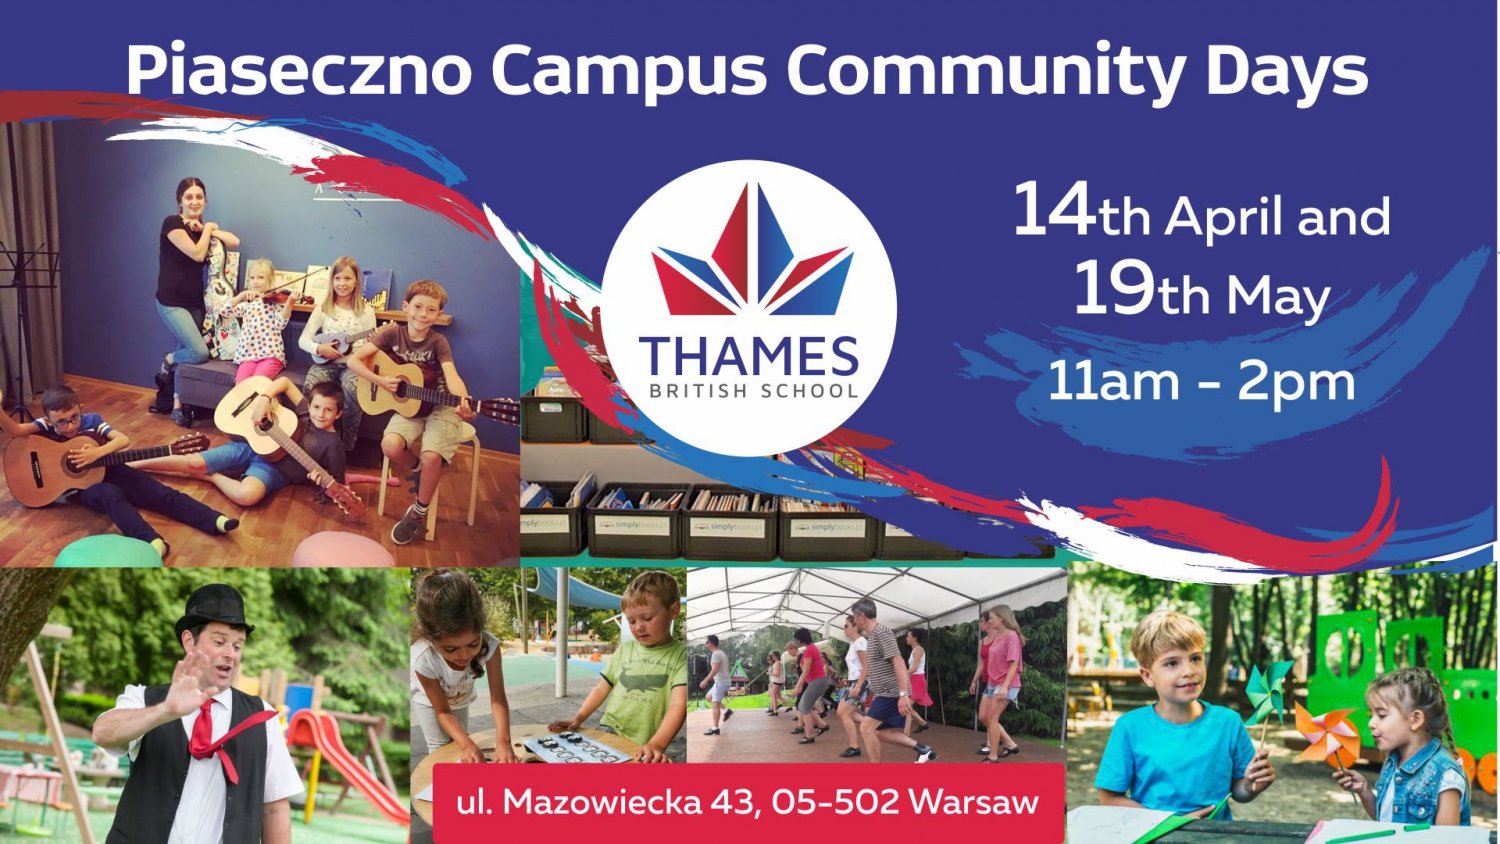 Thames British School Community Days - Piaseczno Campus